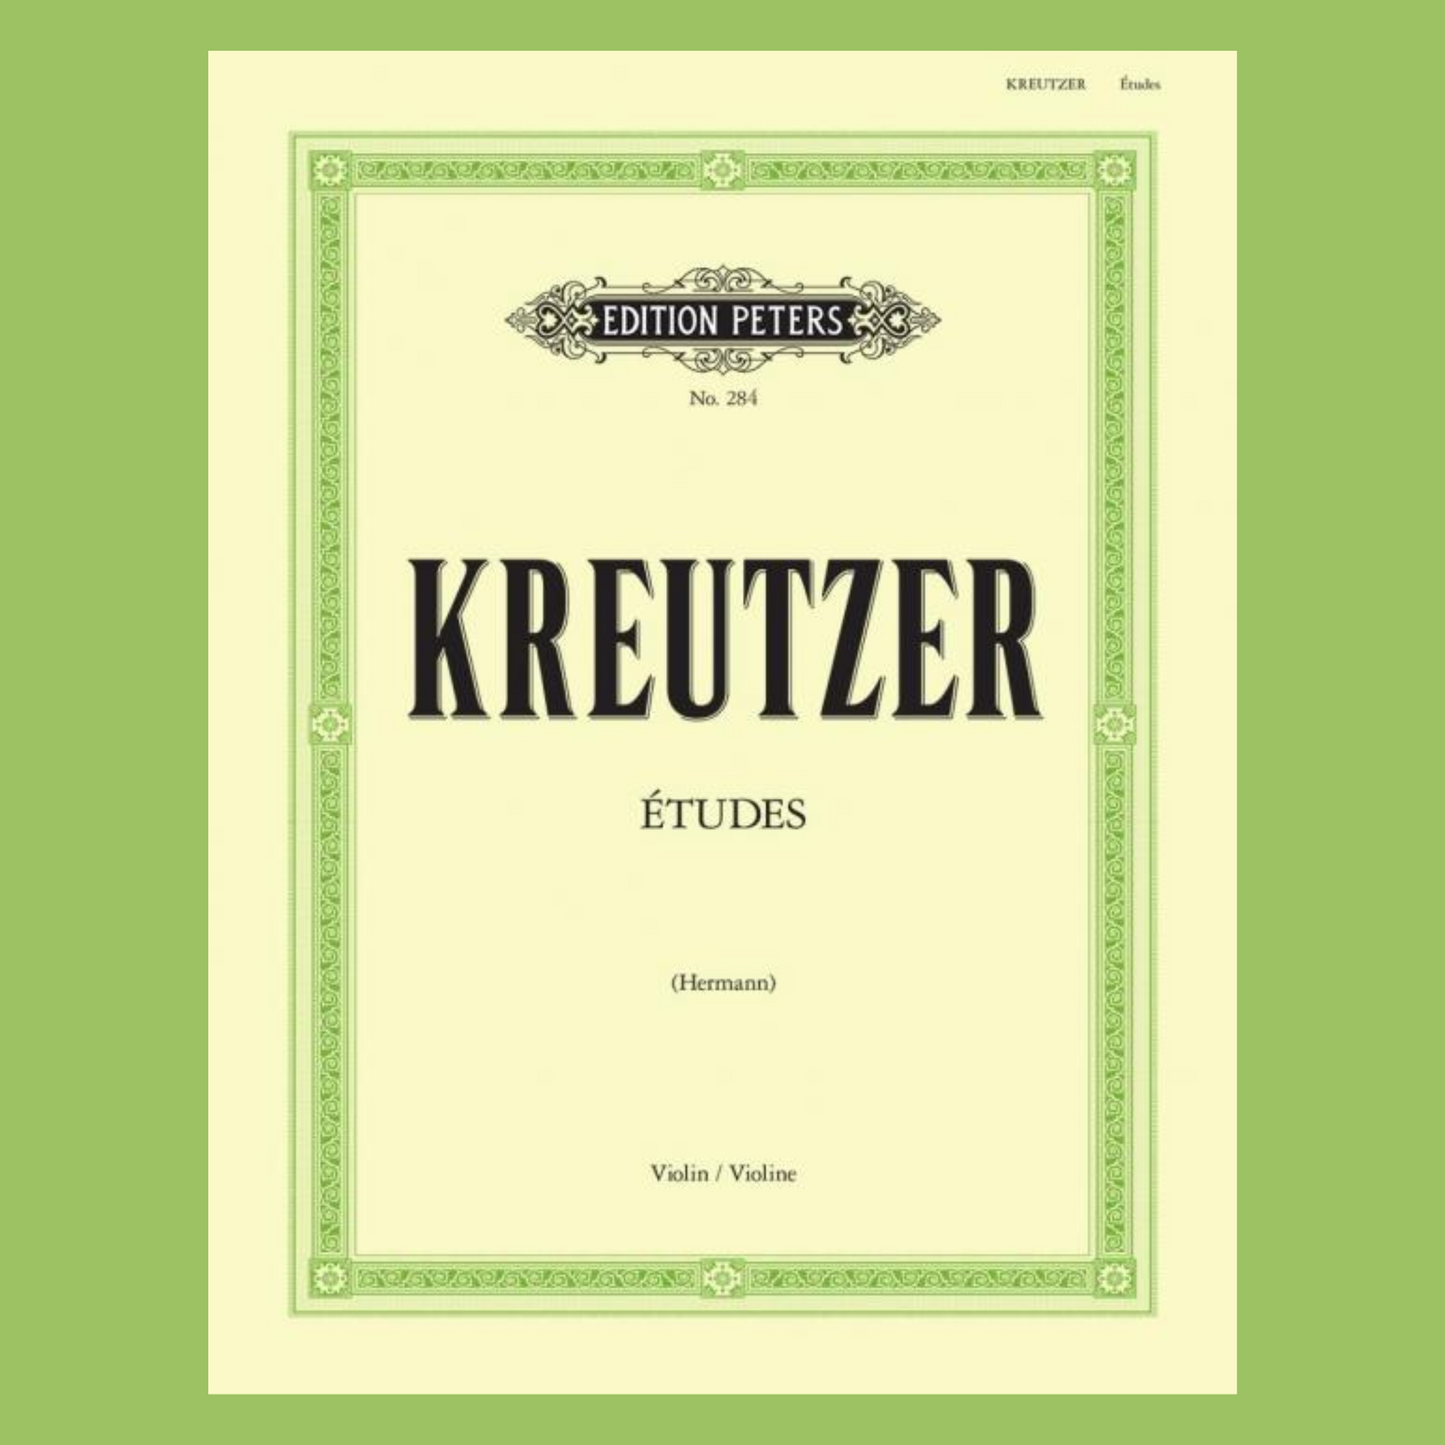 Rudolphe Kreutzer - Etudes 42 Studies For Violin Book